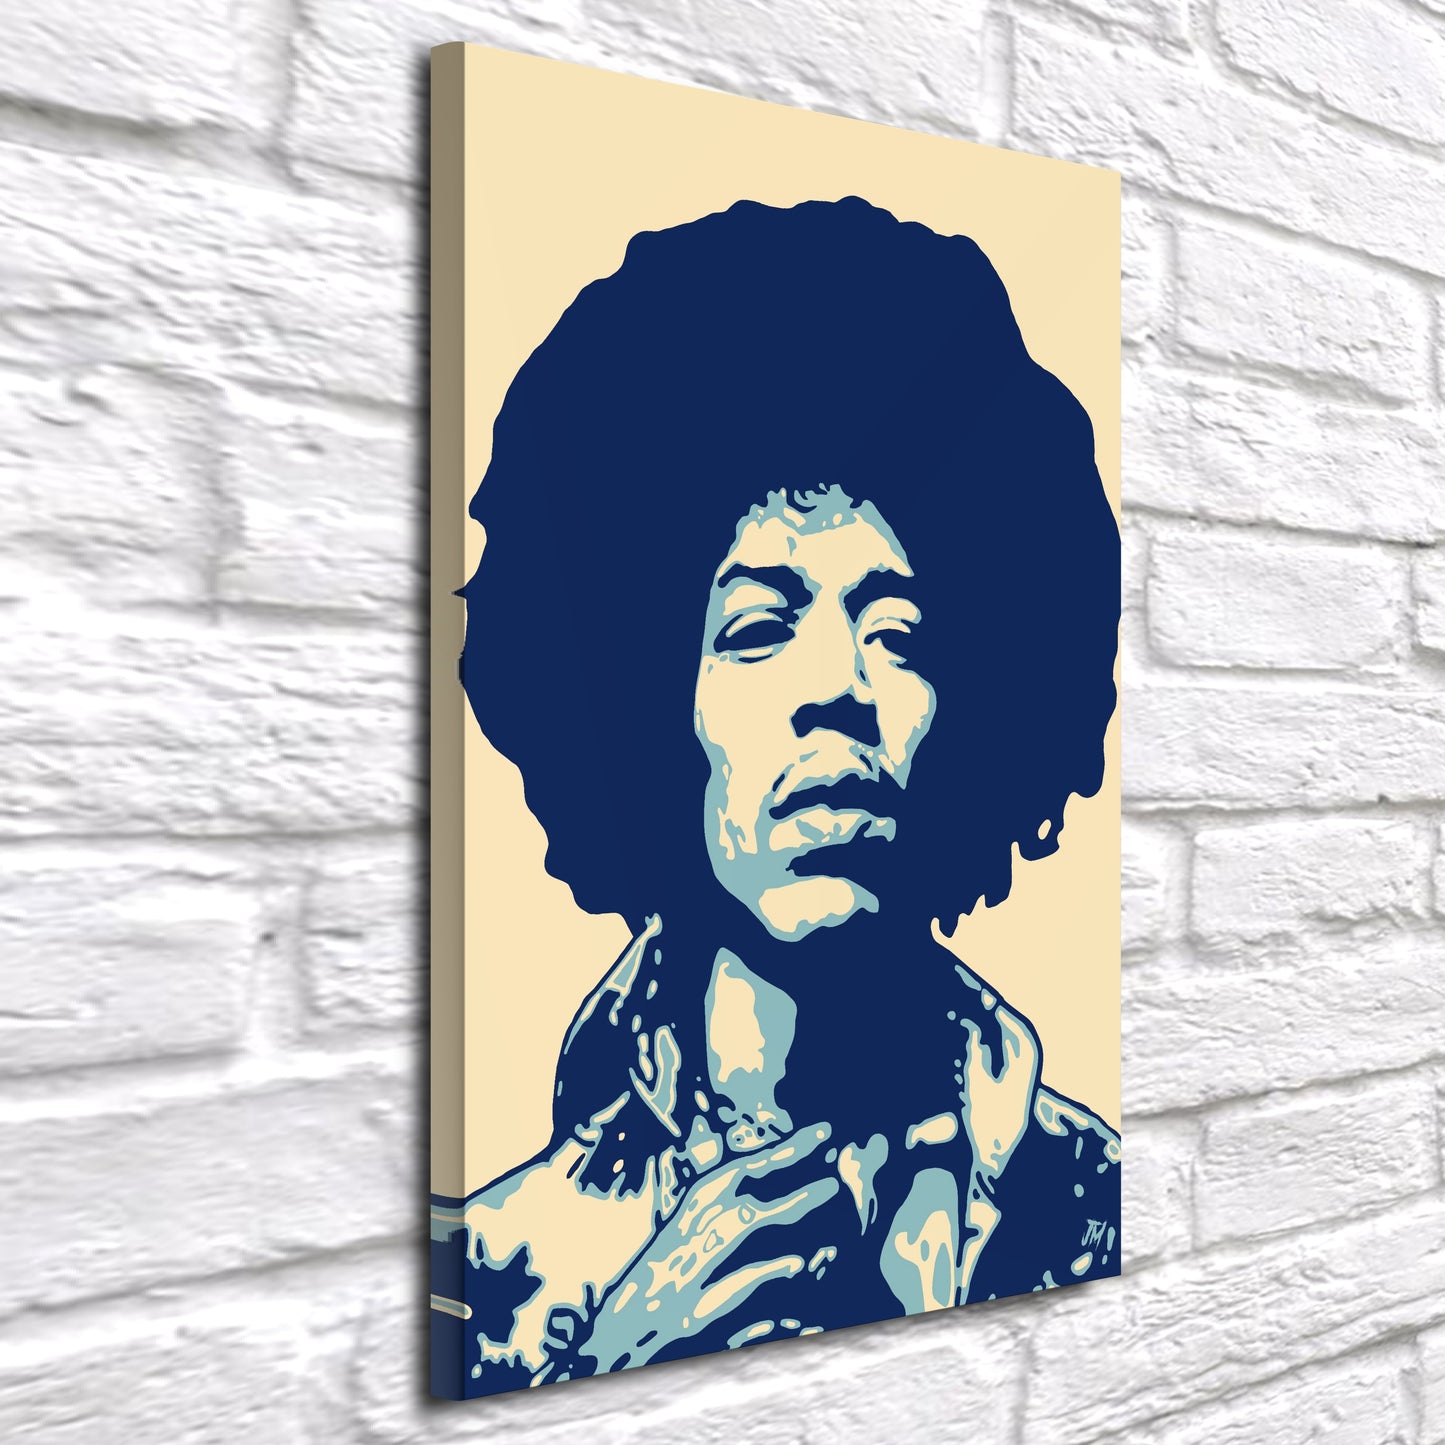 Jimi Hendrix retro popart